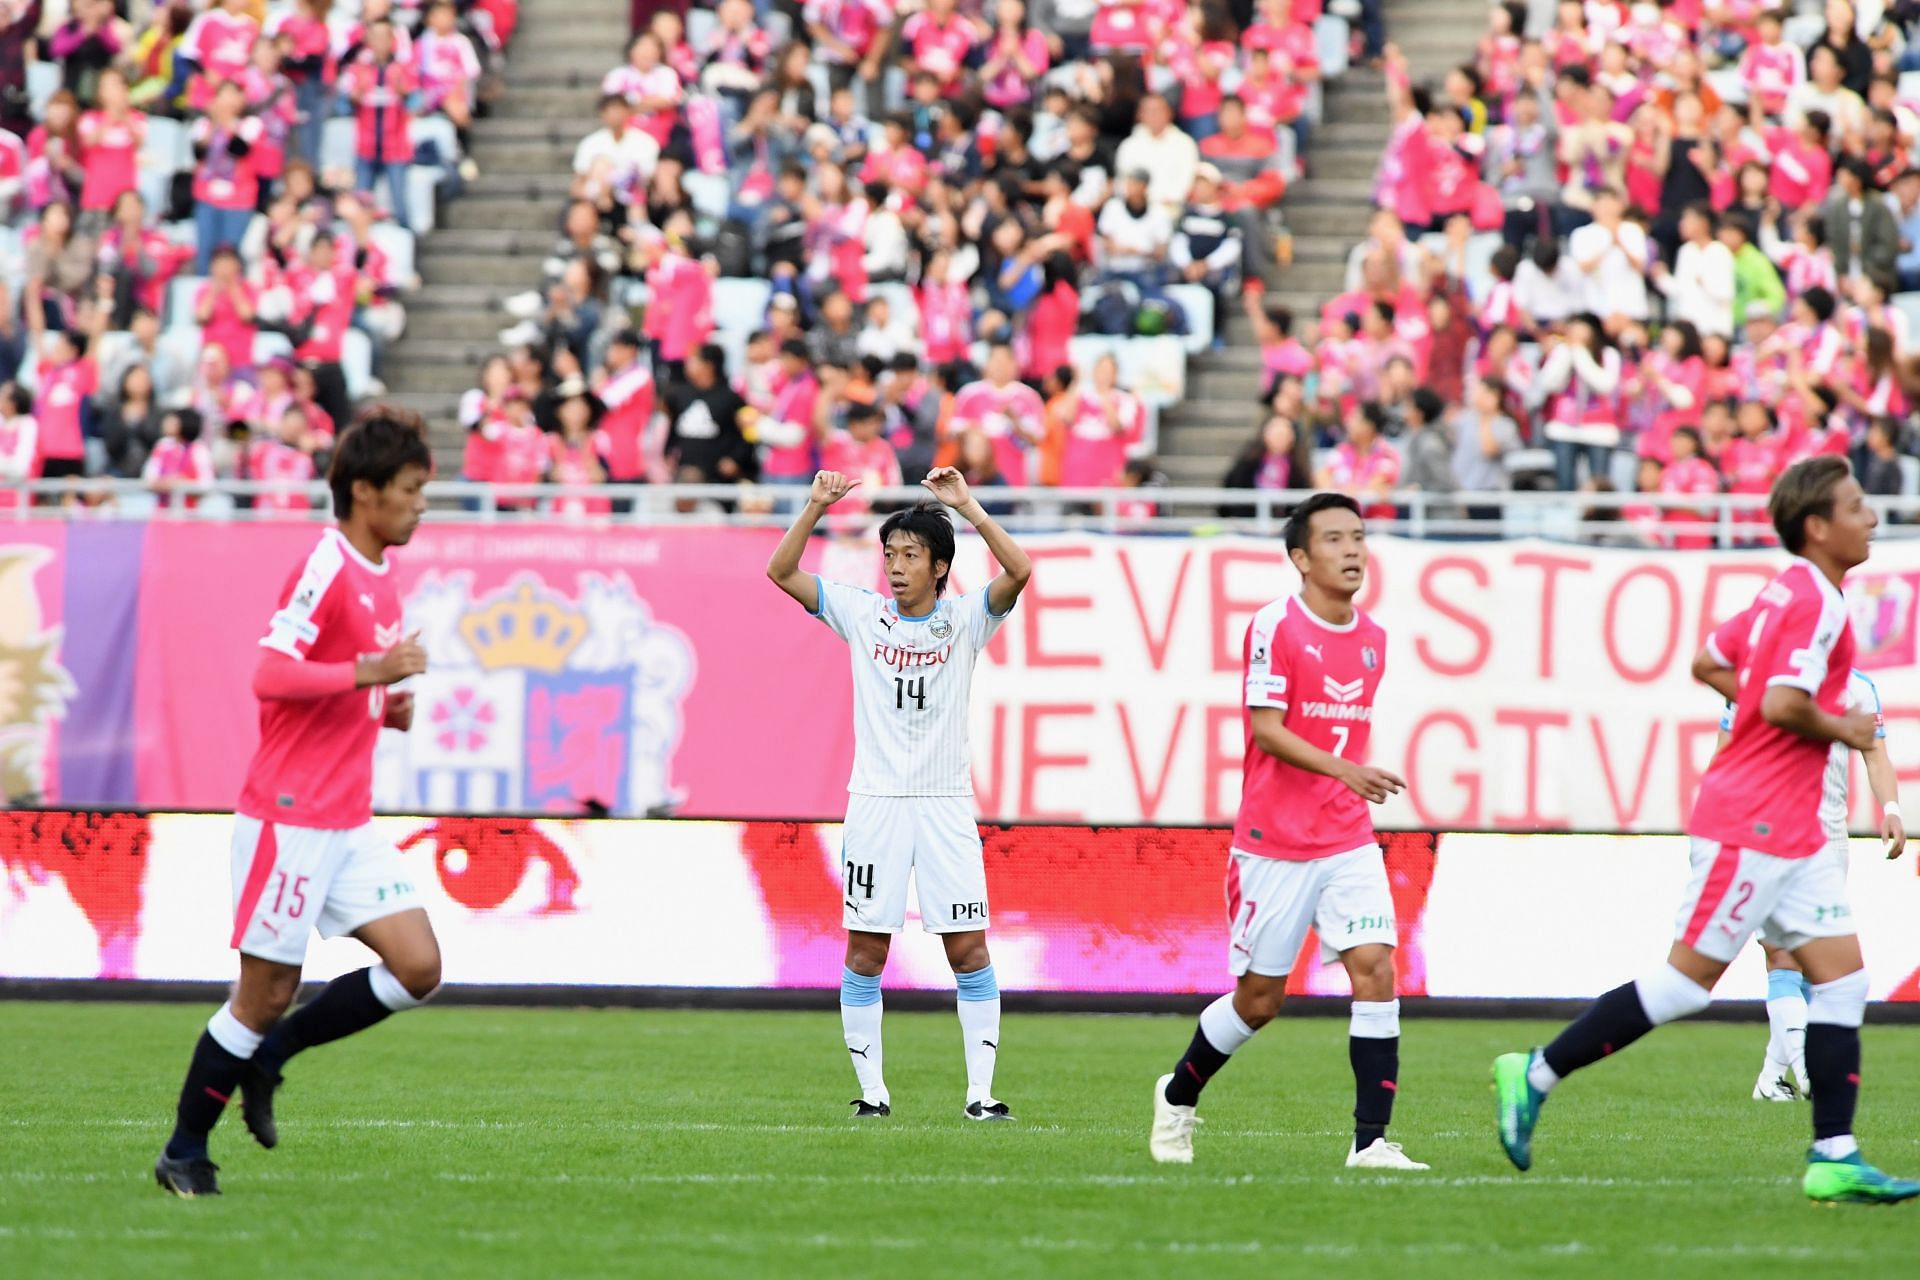 Sagan Tosu vs Kawasaki is an eagerly anticipated J1 league fixture this week.